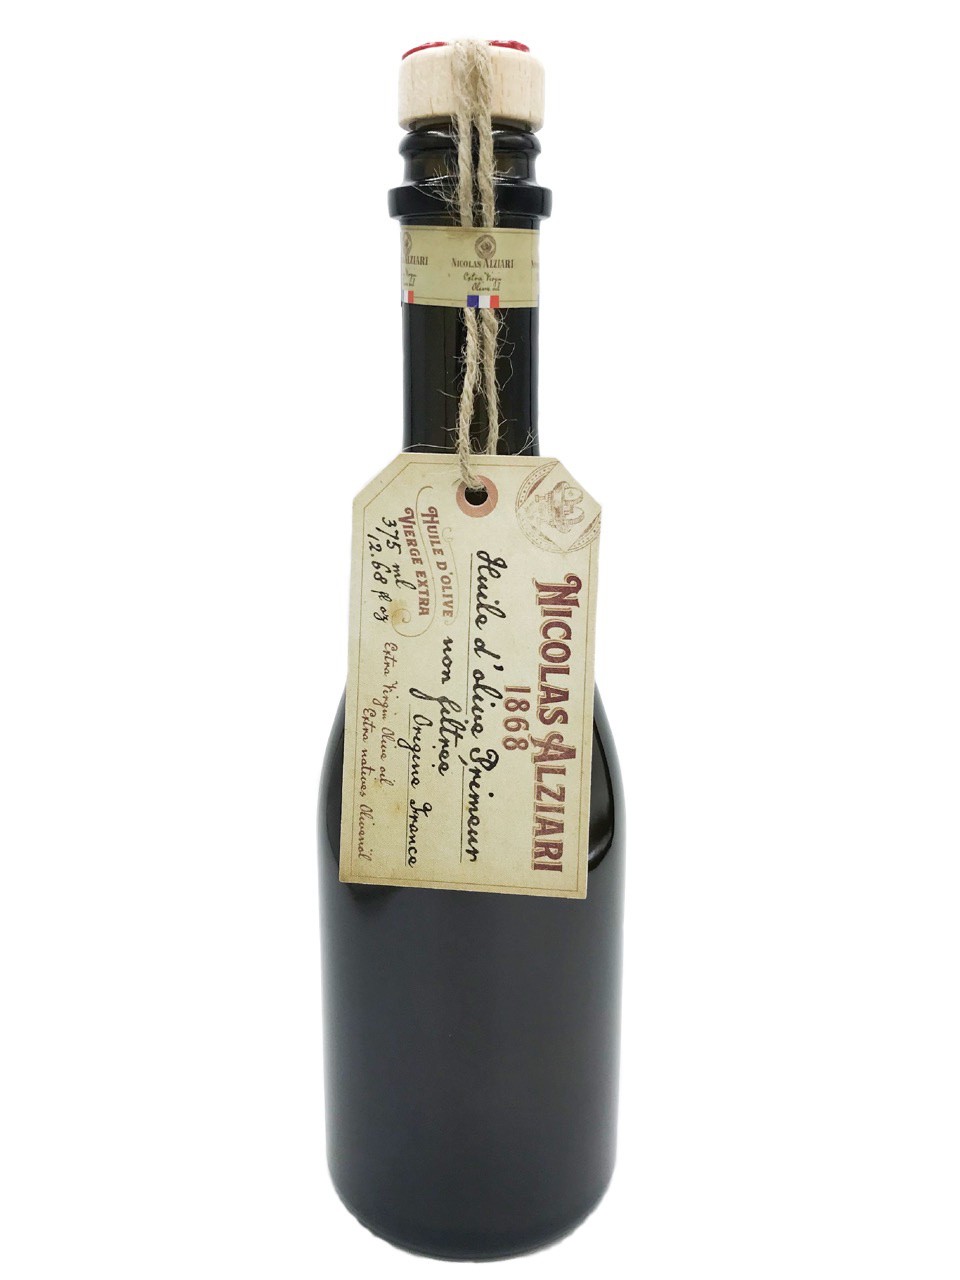 Unfiltered olive oil 375 ml (bottle club) harvest 2021 - Nicolas Alziari